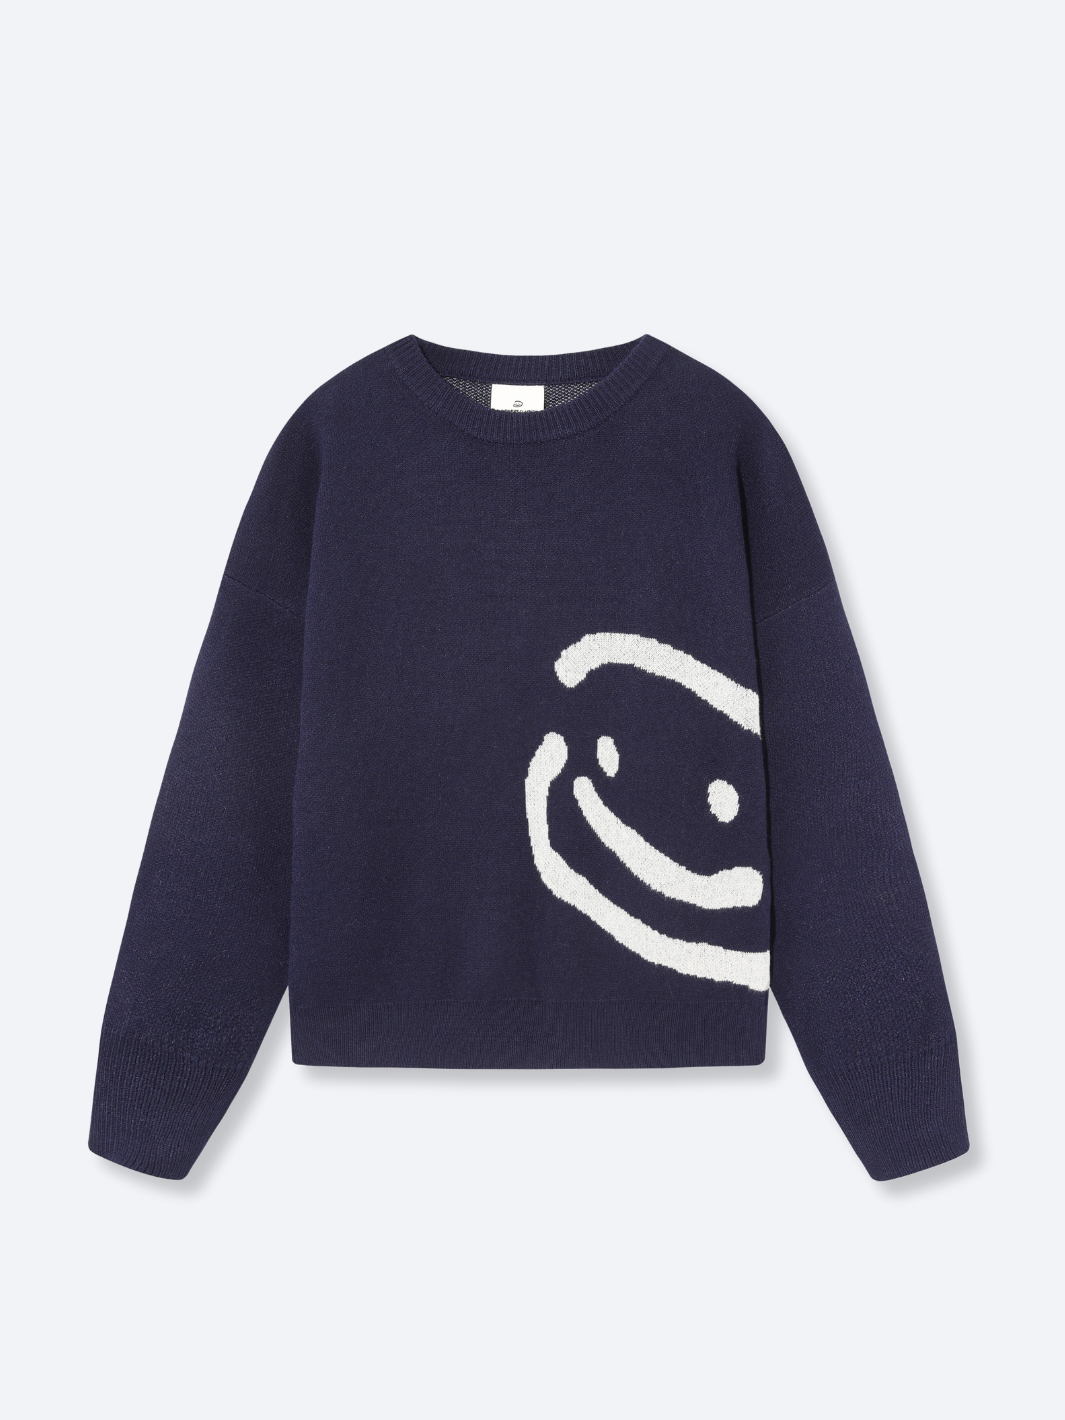 smiley logo knit - navy blue